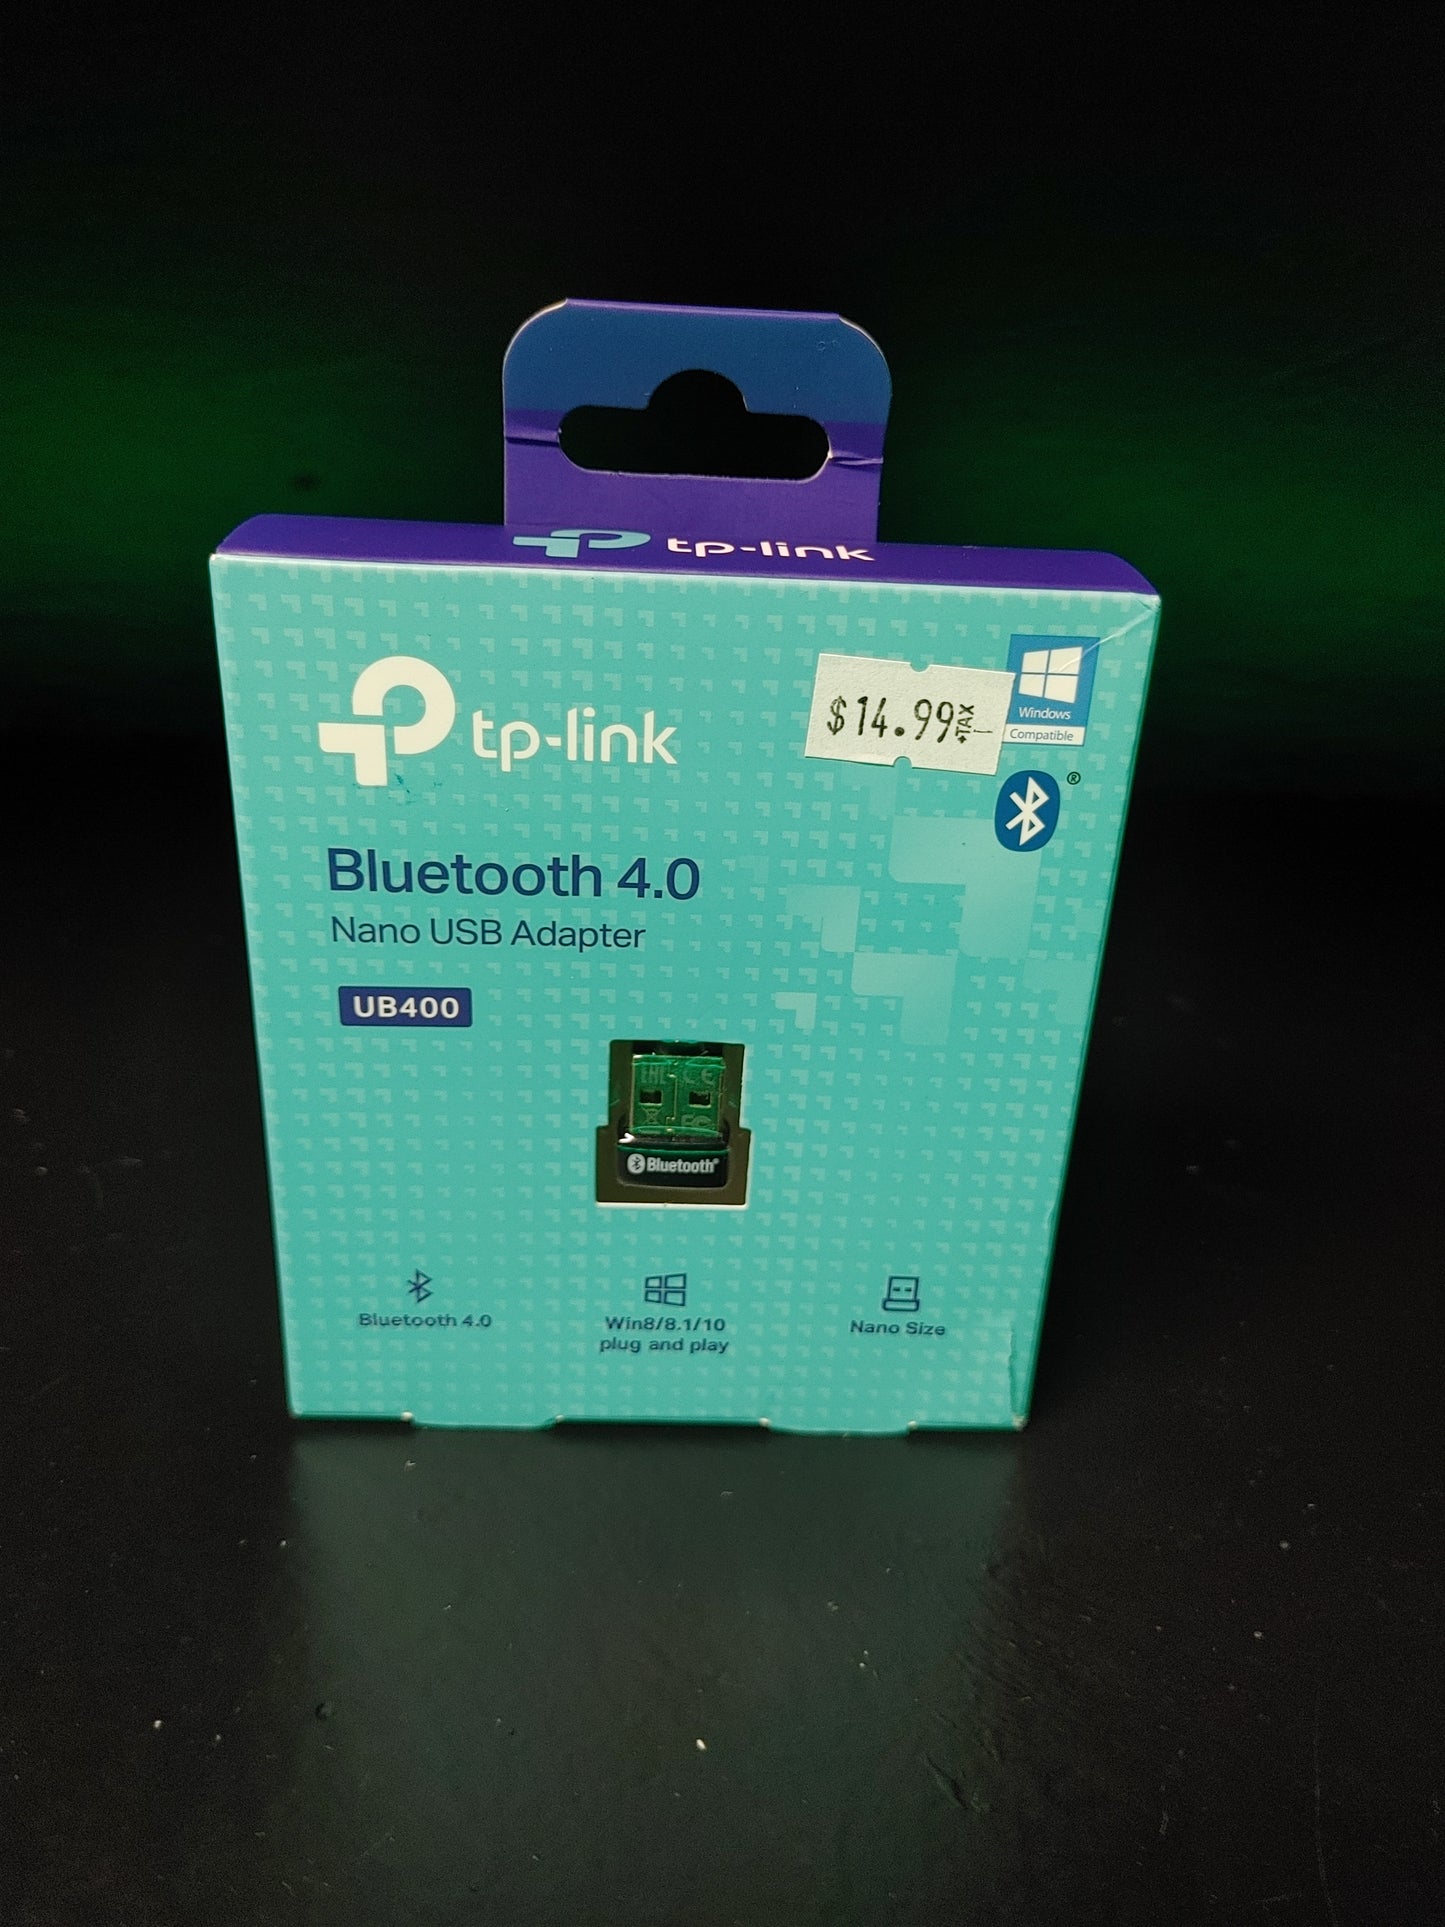 tp-link Bluetooth 4.0 USB Adapter